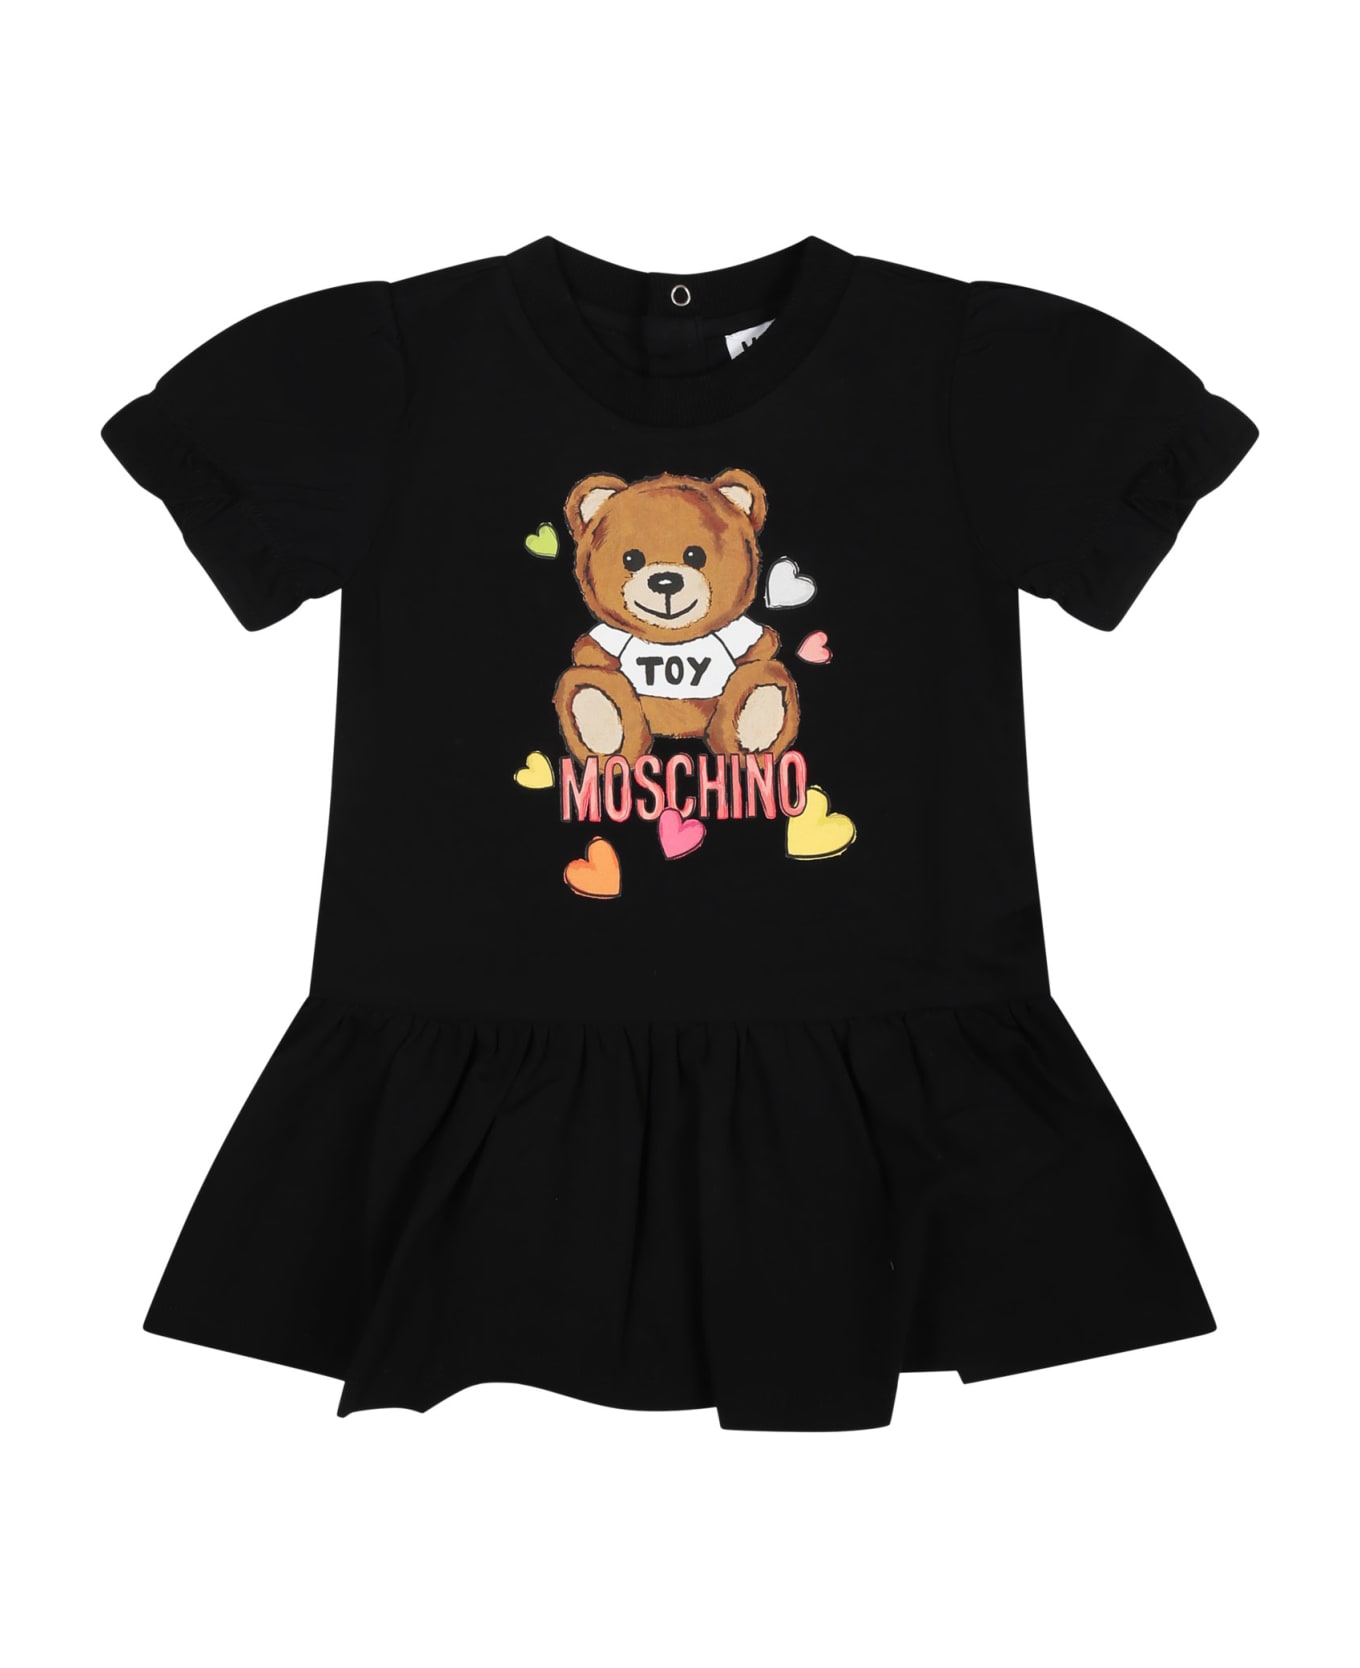 Moschino Black Dress For Baby Girl With Teddy Bear Print - Black